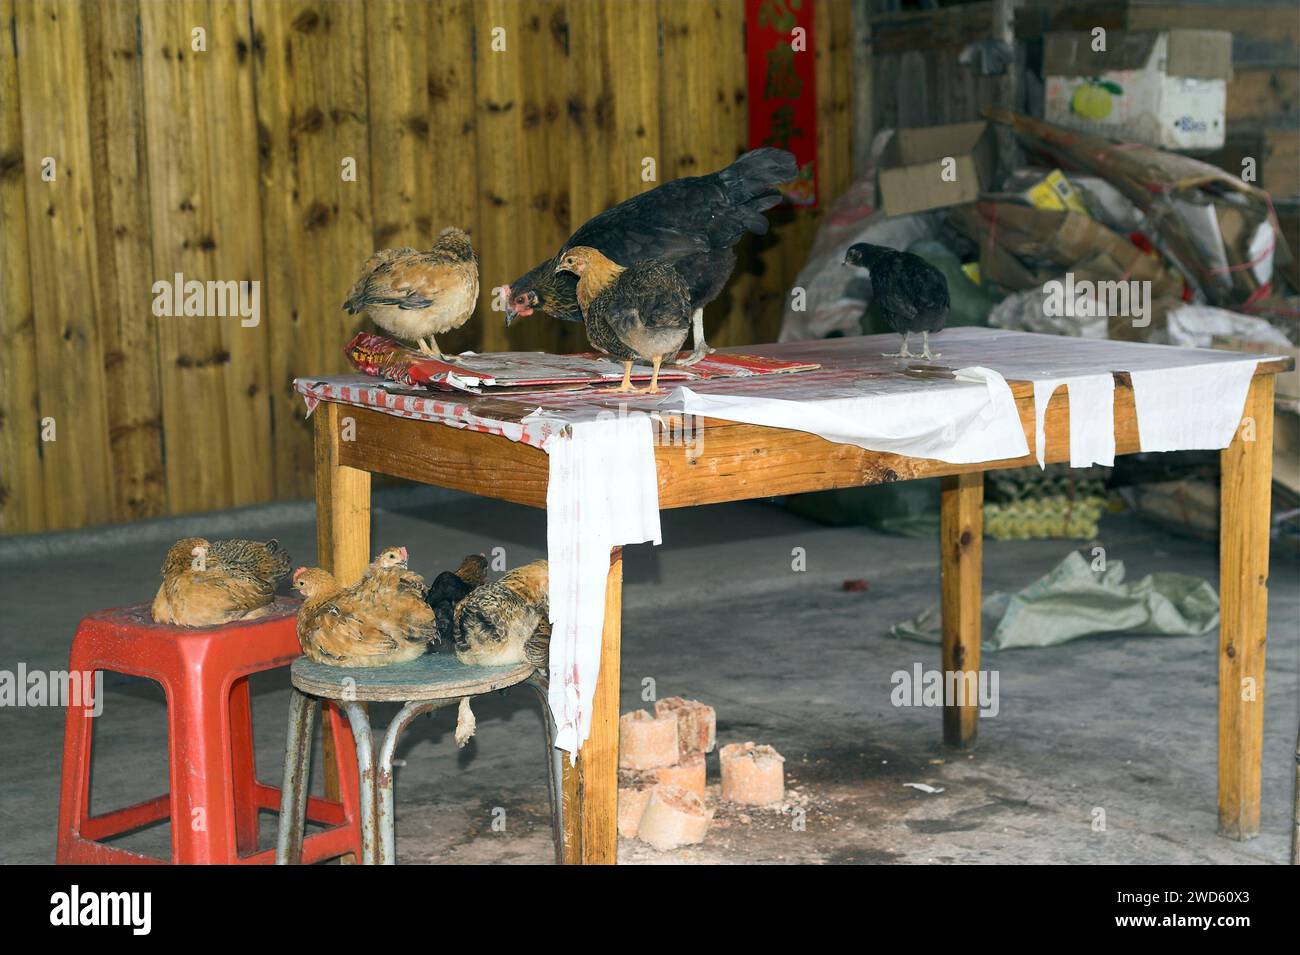 龙胜镇 (龙胜县) 中國 Longsheng, Dazhai Longji Ping'an Zhuang, Chine ; Une poule avec des poussins marchant sur la table ; Eine Henne mit Küken läuft auf dem Tisch Banque D'Images